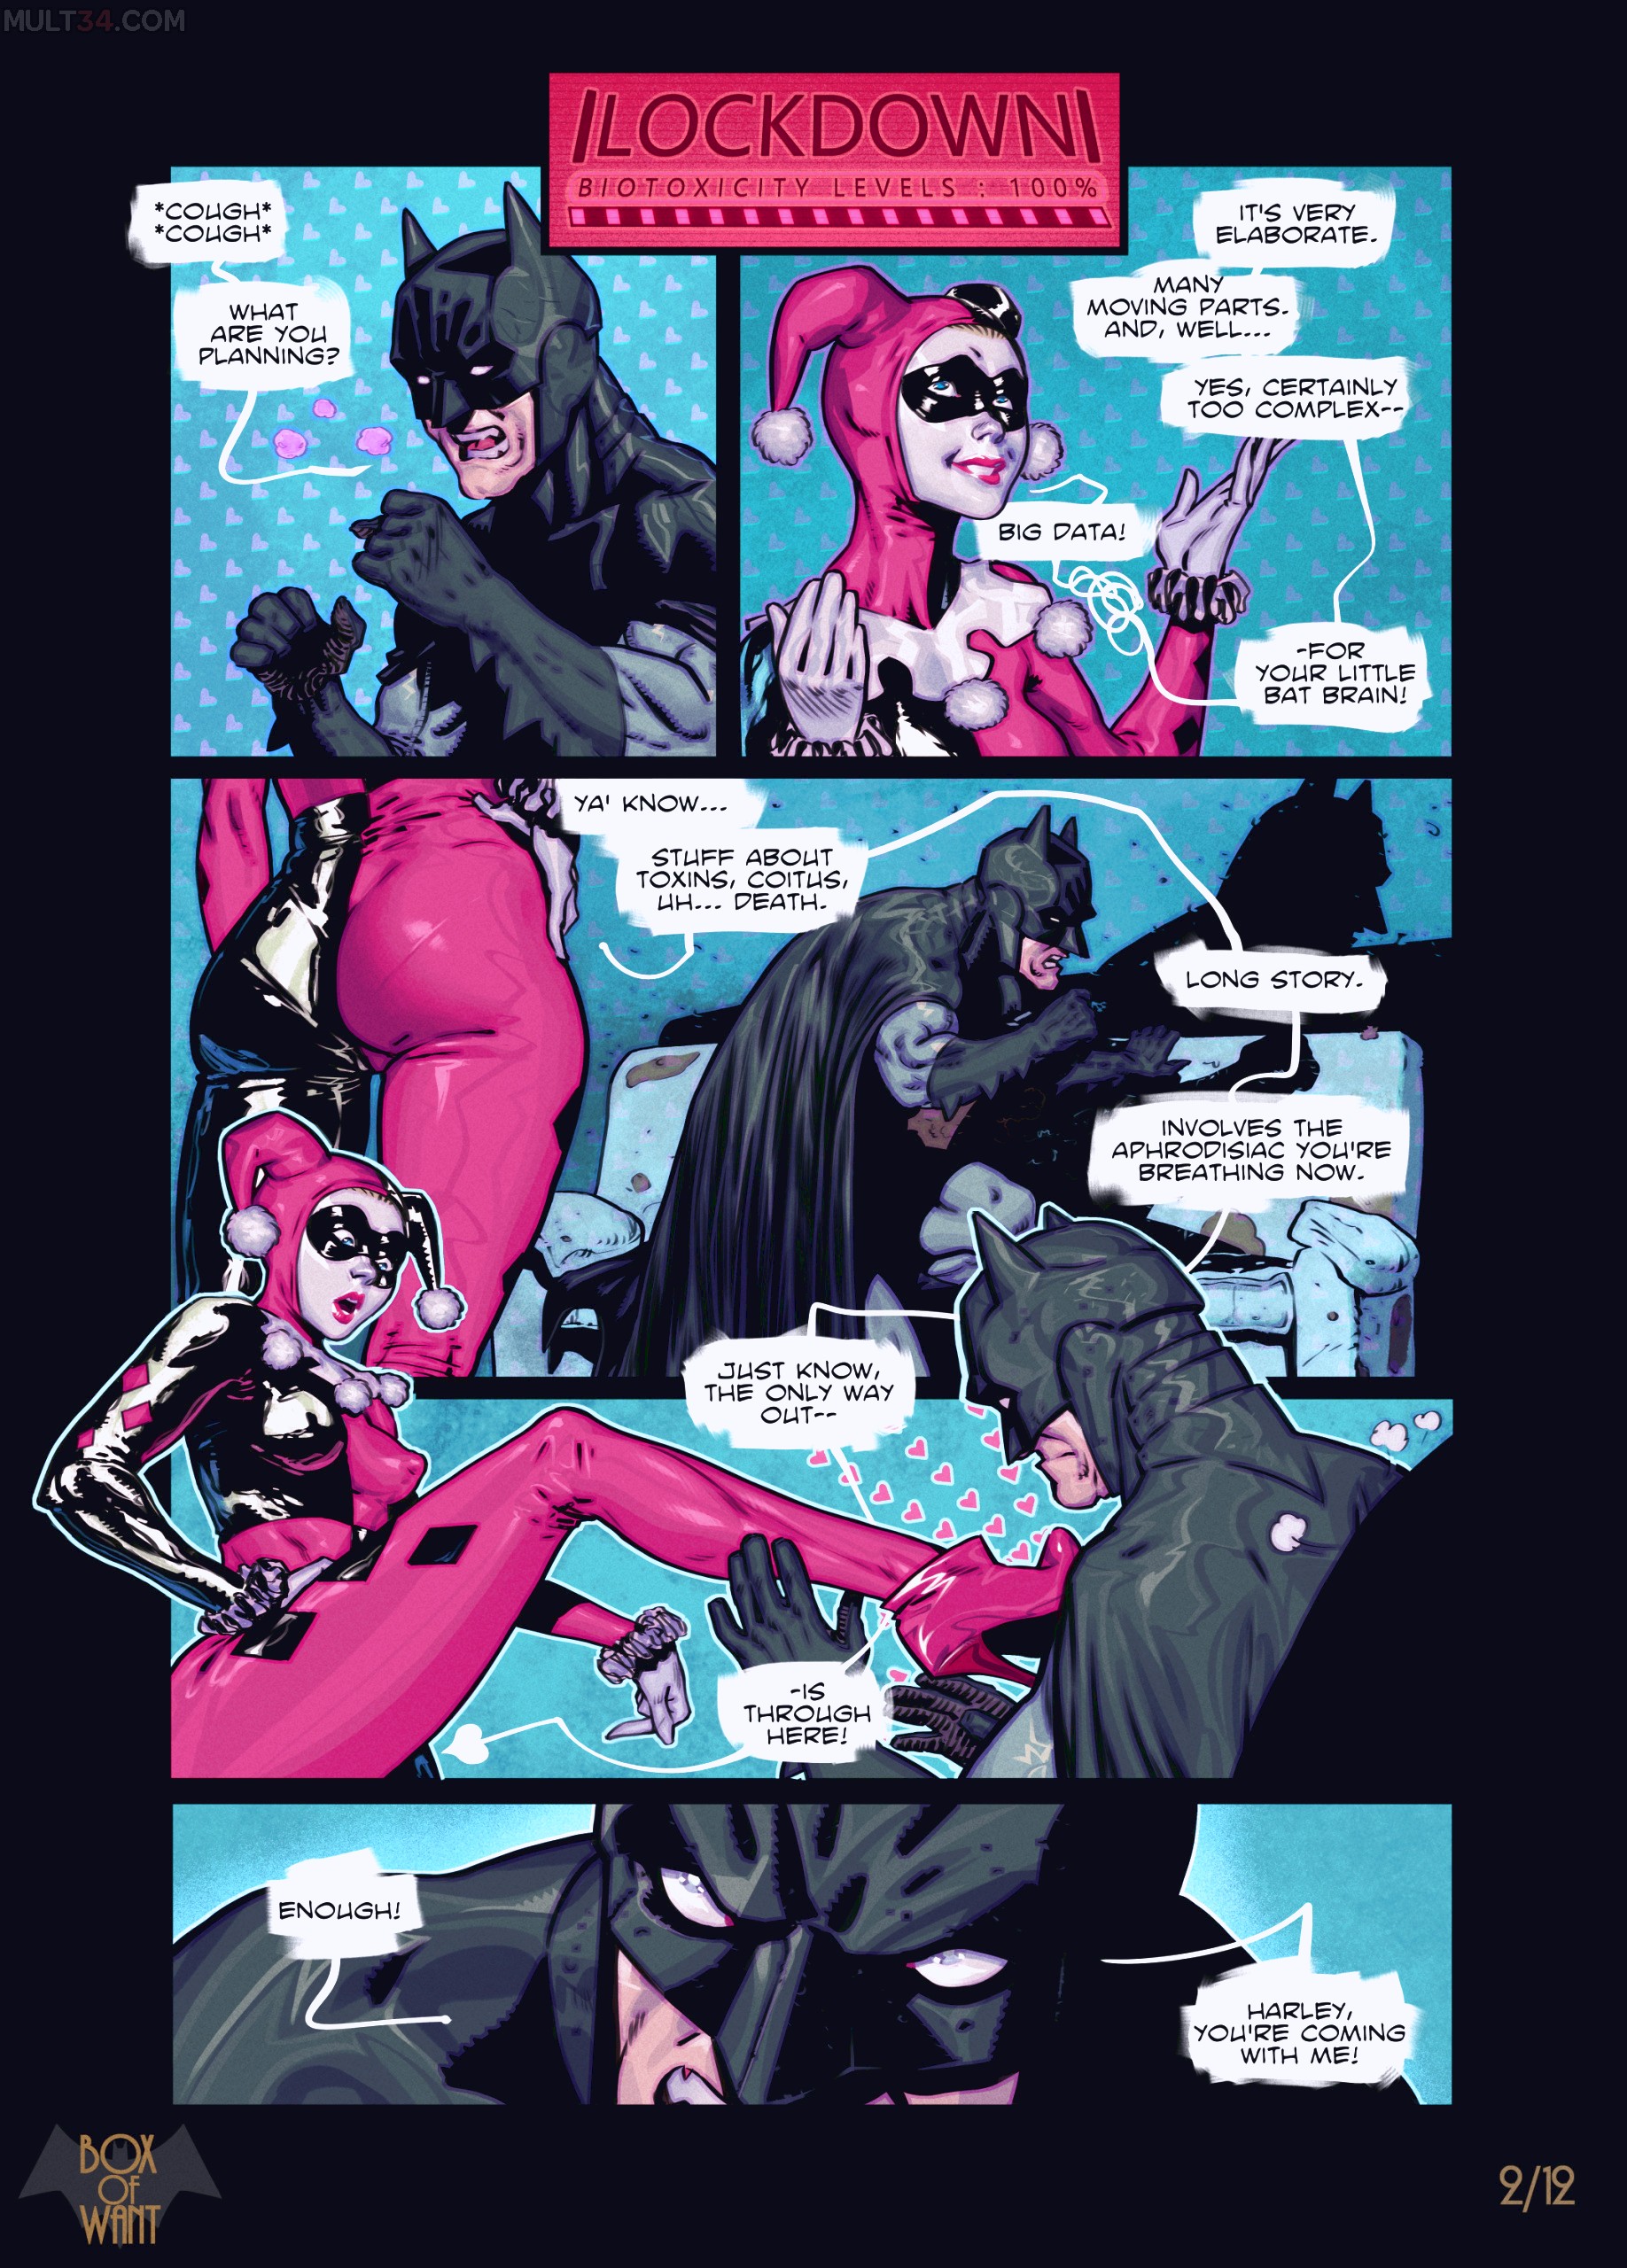 Batman Harley Porn - Planned Backfire porn comic - the best cartoon porn comics, Rule 34 | MULT34